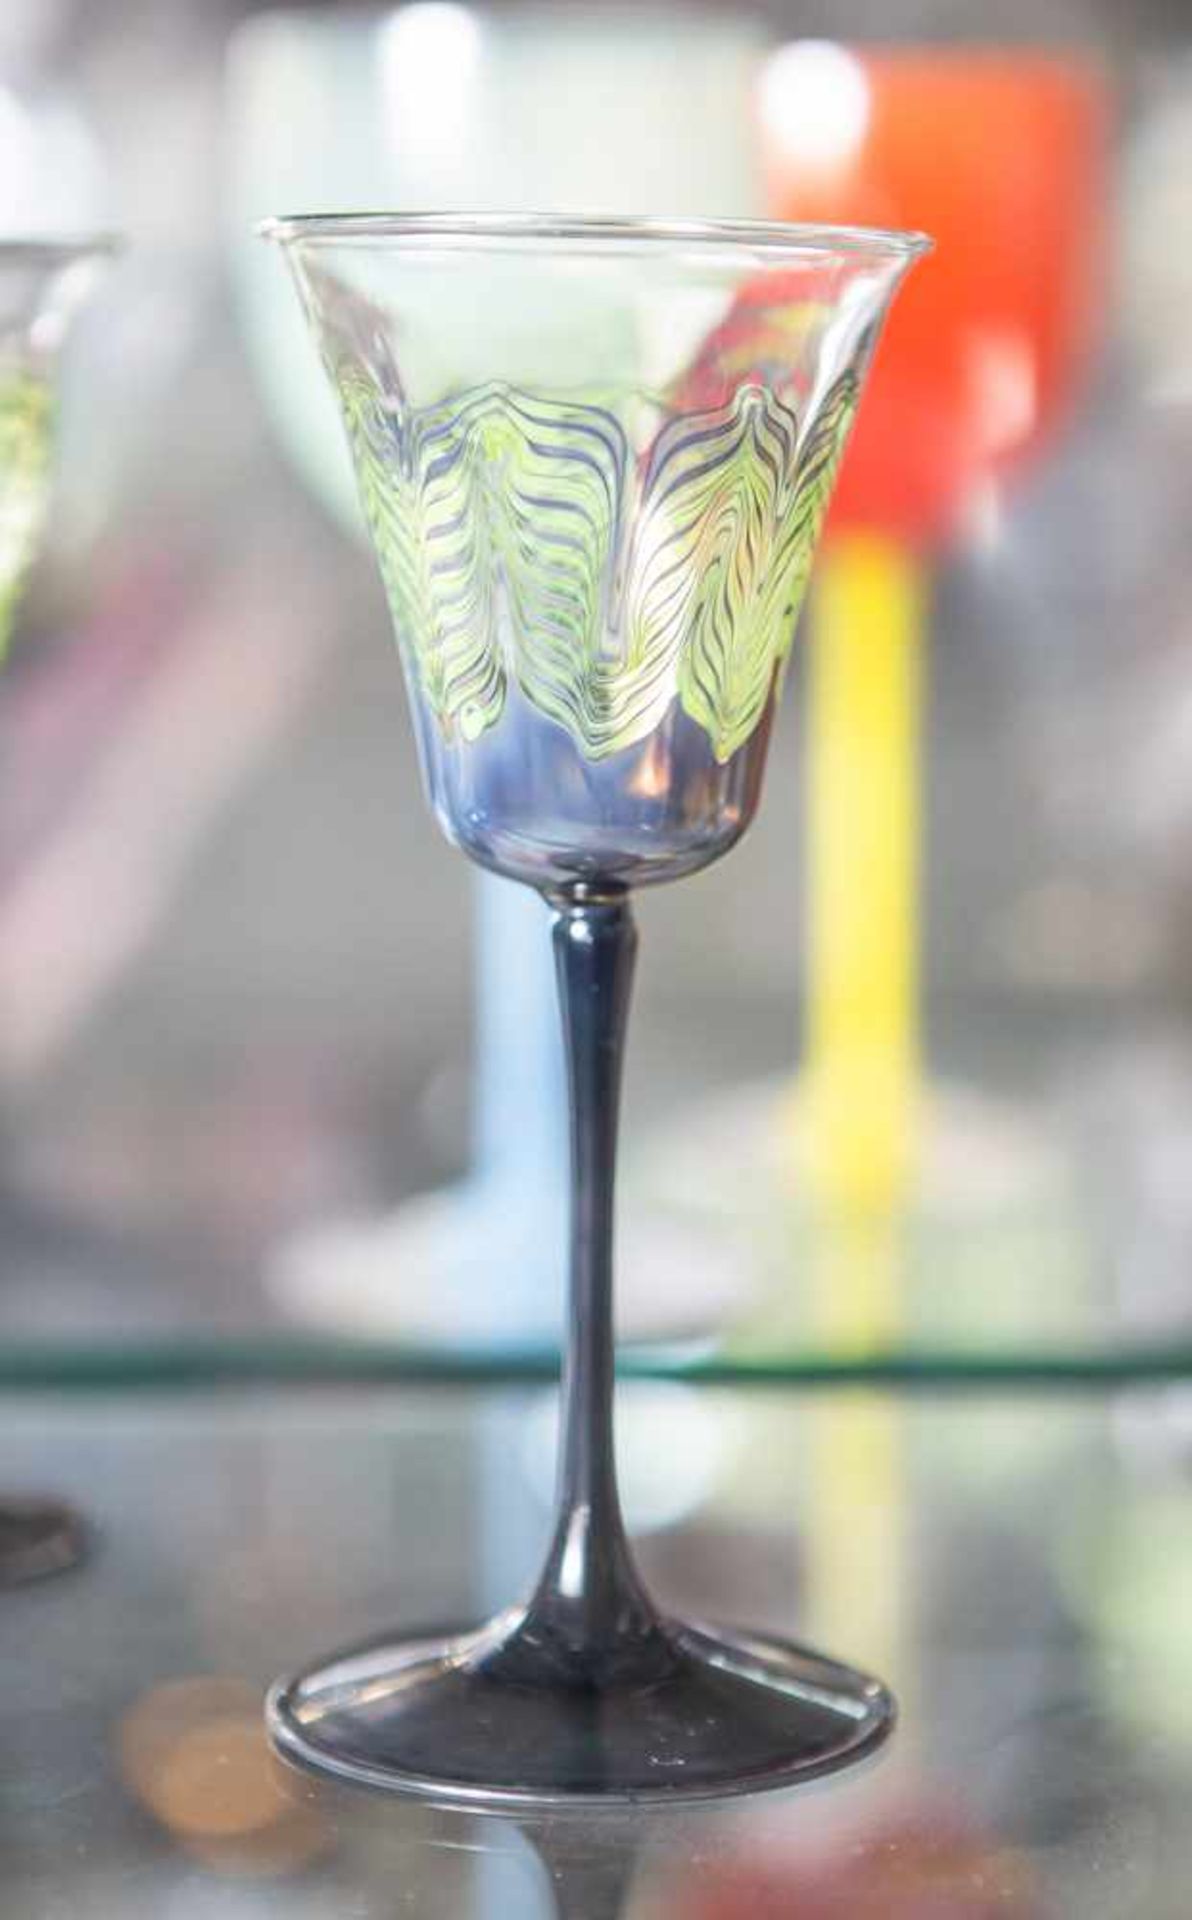 Pokal, Entwurf Siegfried Eck, farbloses Glas, Fuß u. Schaft opak schwarz, Kuppa mitgrün-grauer